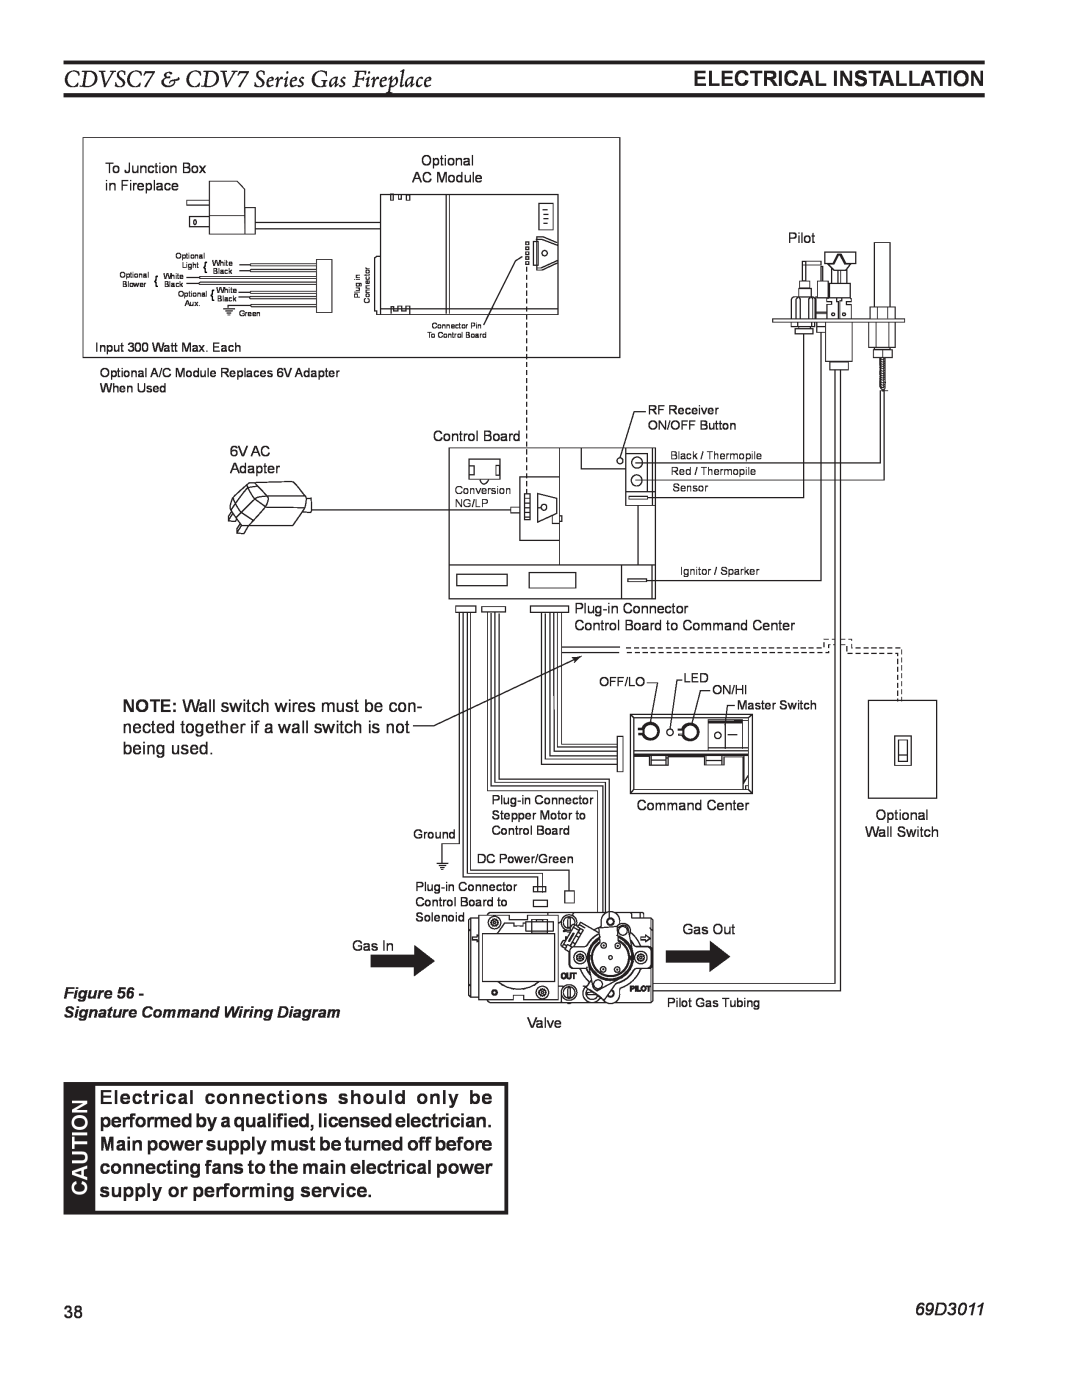 Monessen Hearth Electrical Installation, CDVSC7 & CDV7 Series Gas Fireplace, 69D3011, Signature Command Wiring Diagram 